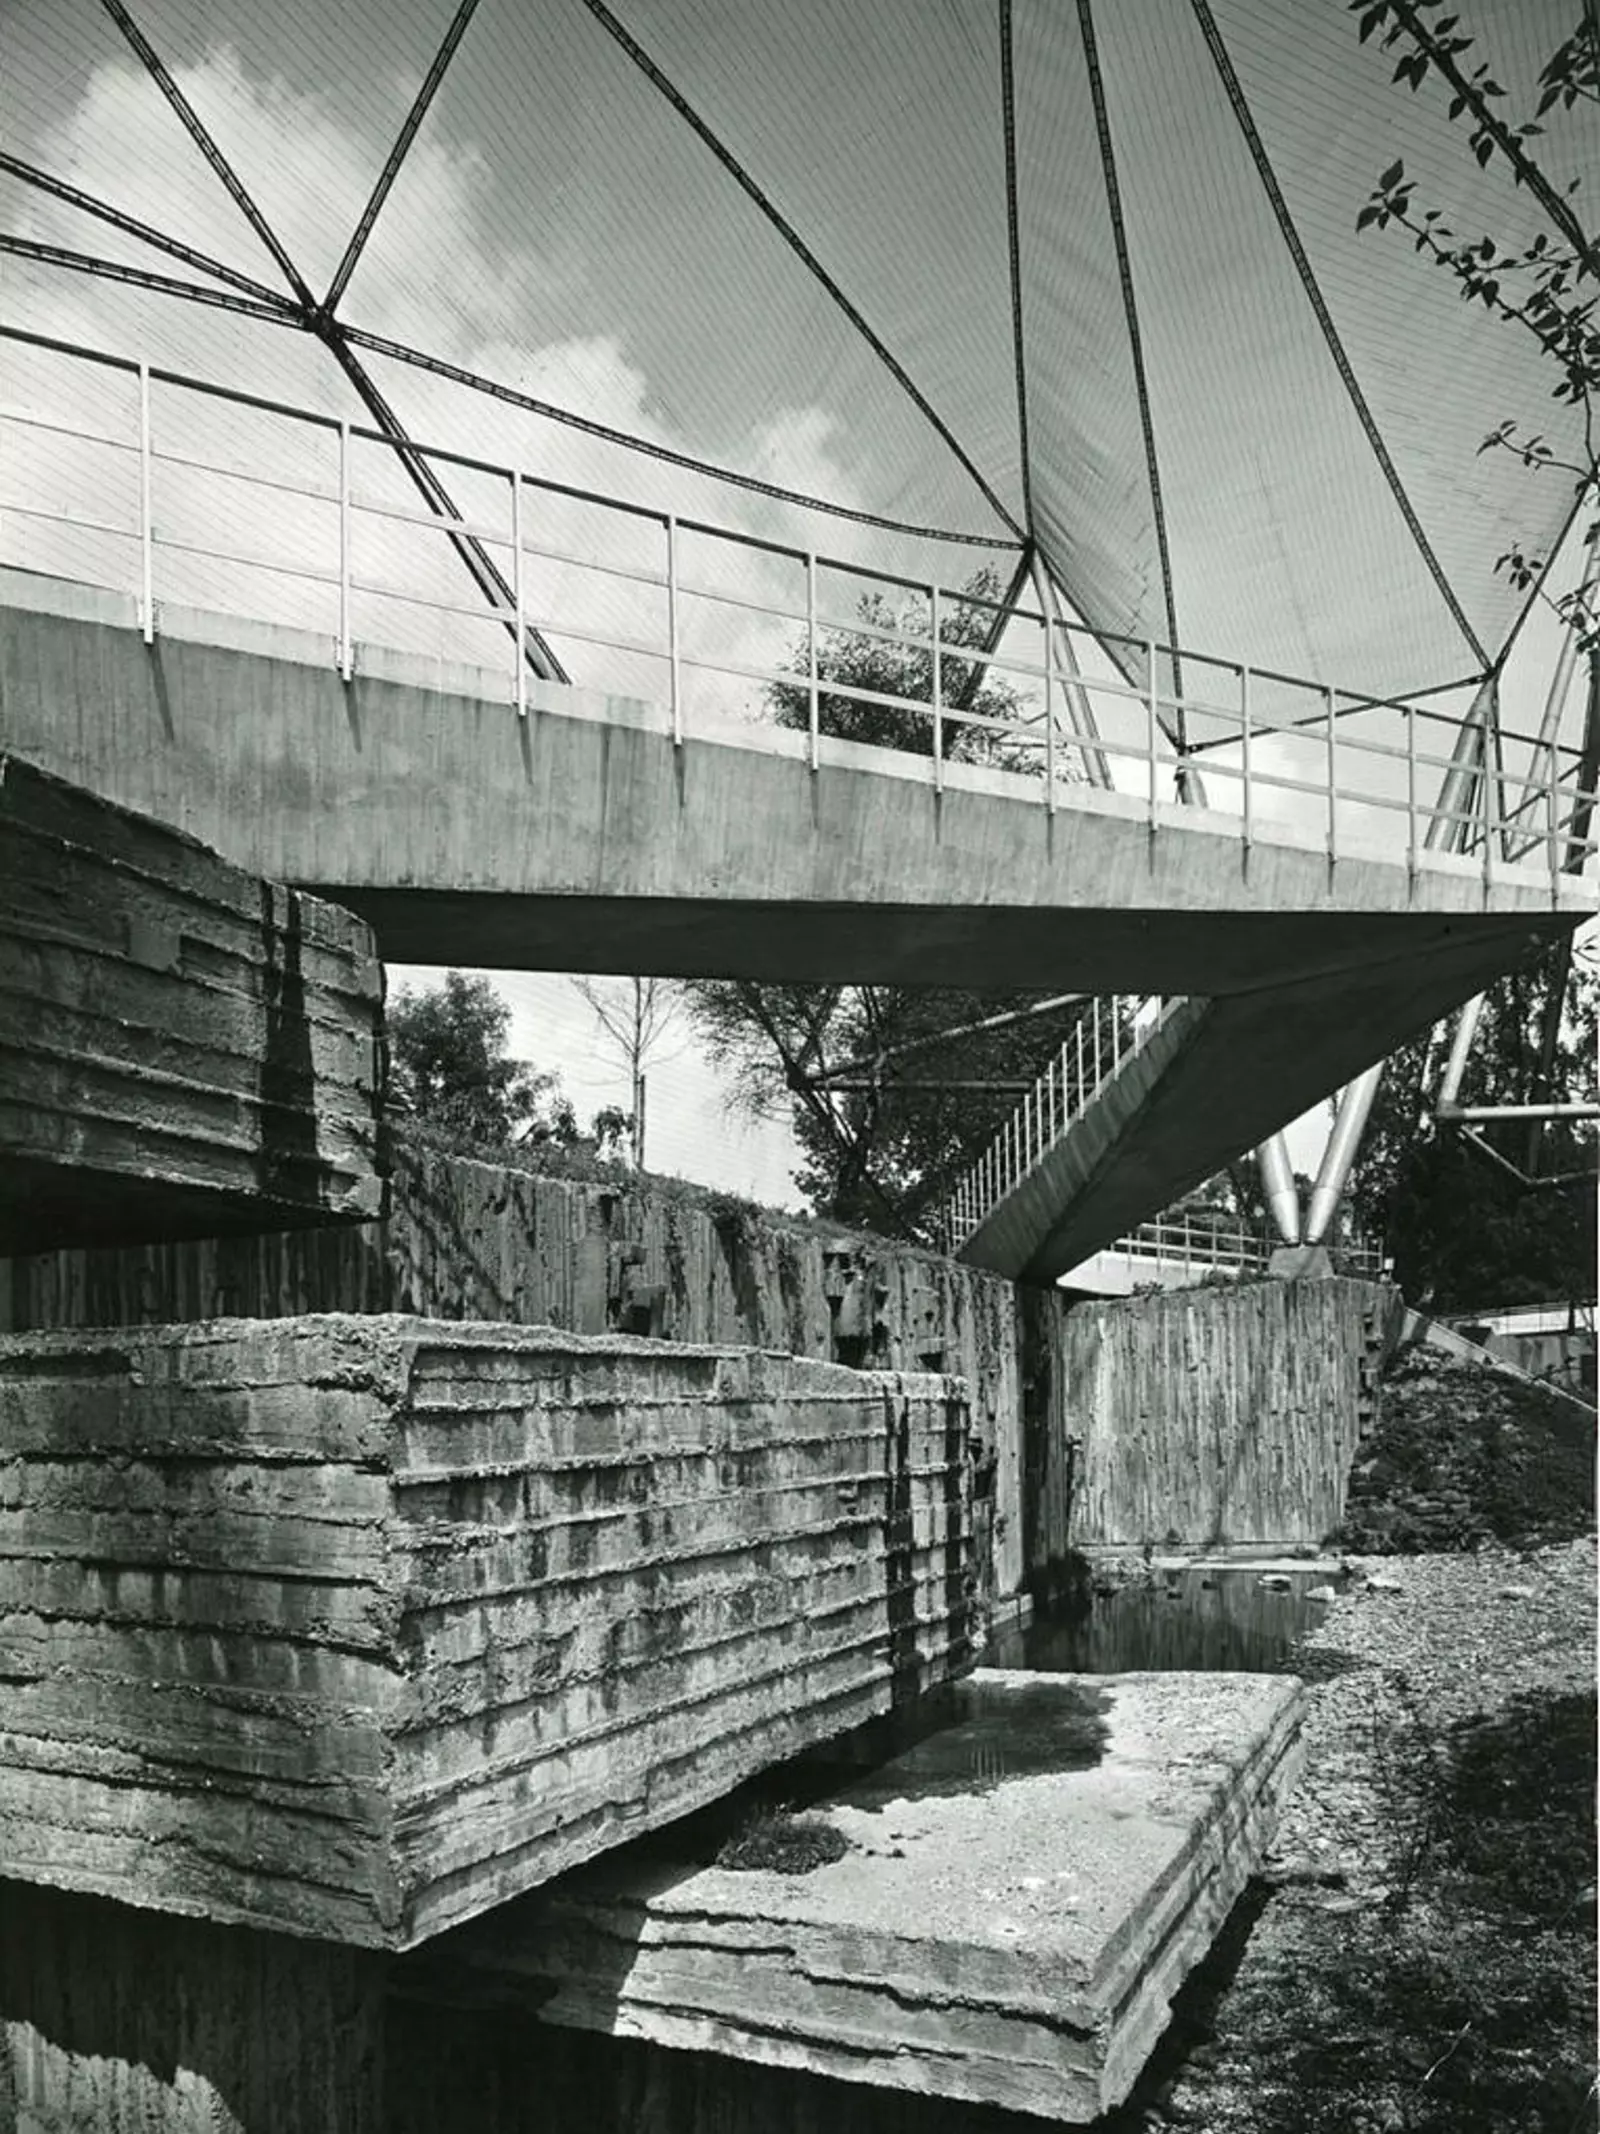 The Snowdon Aviary seen from inside, below the walkway in June 1965.